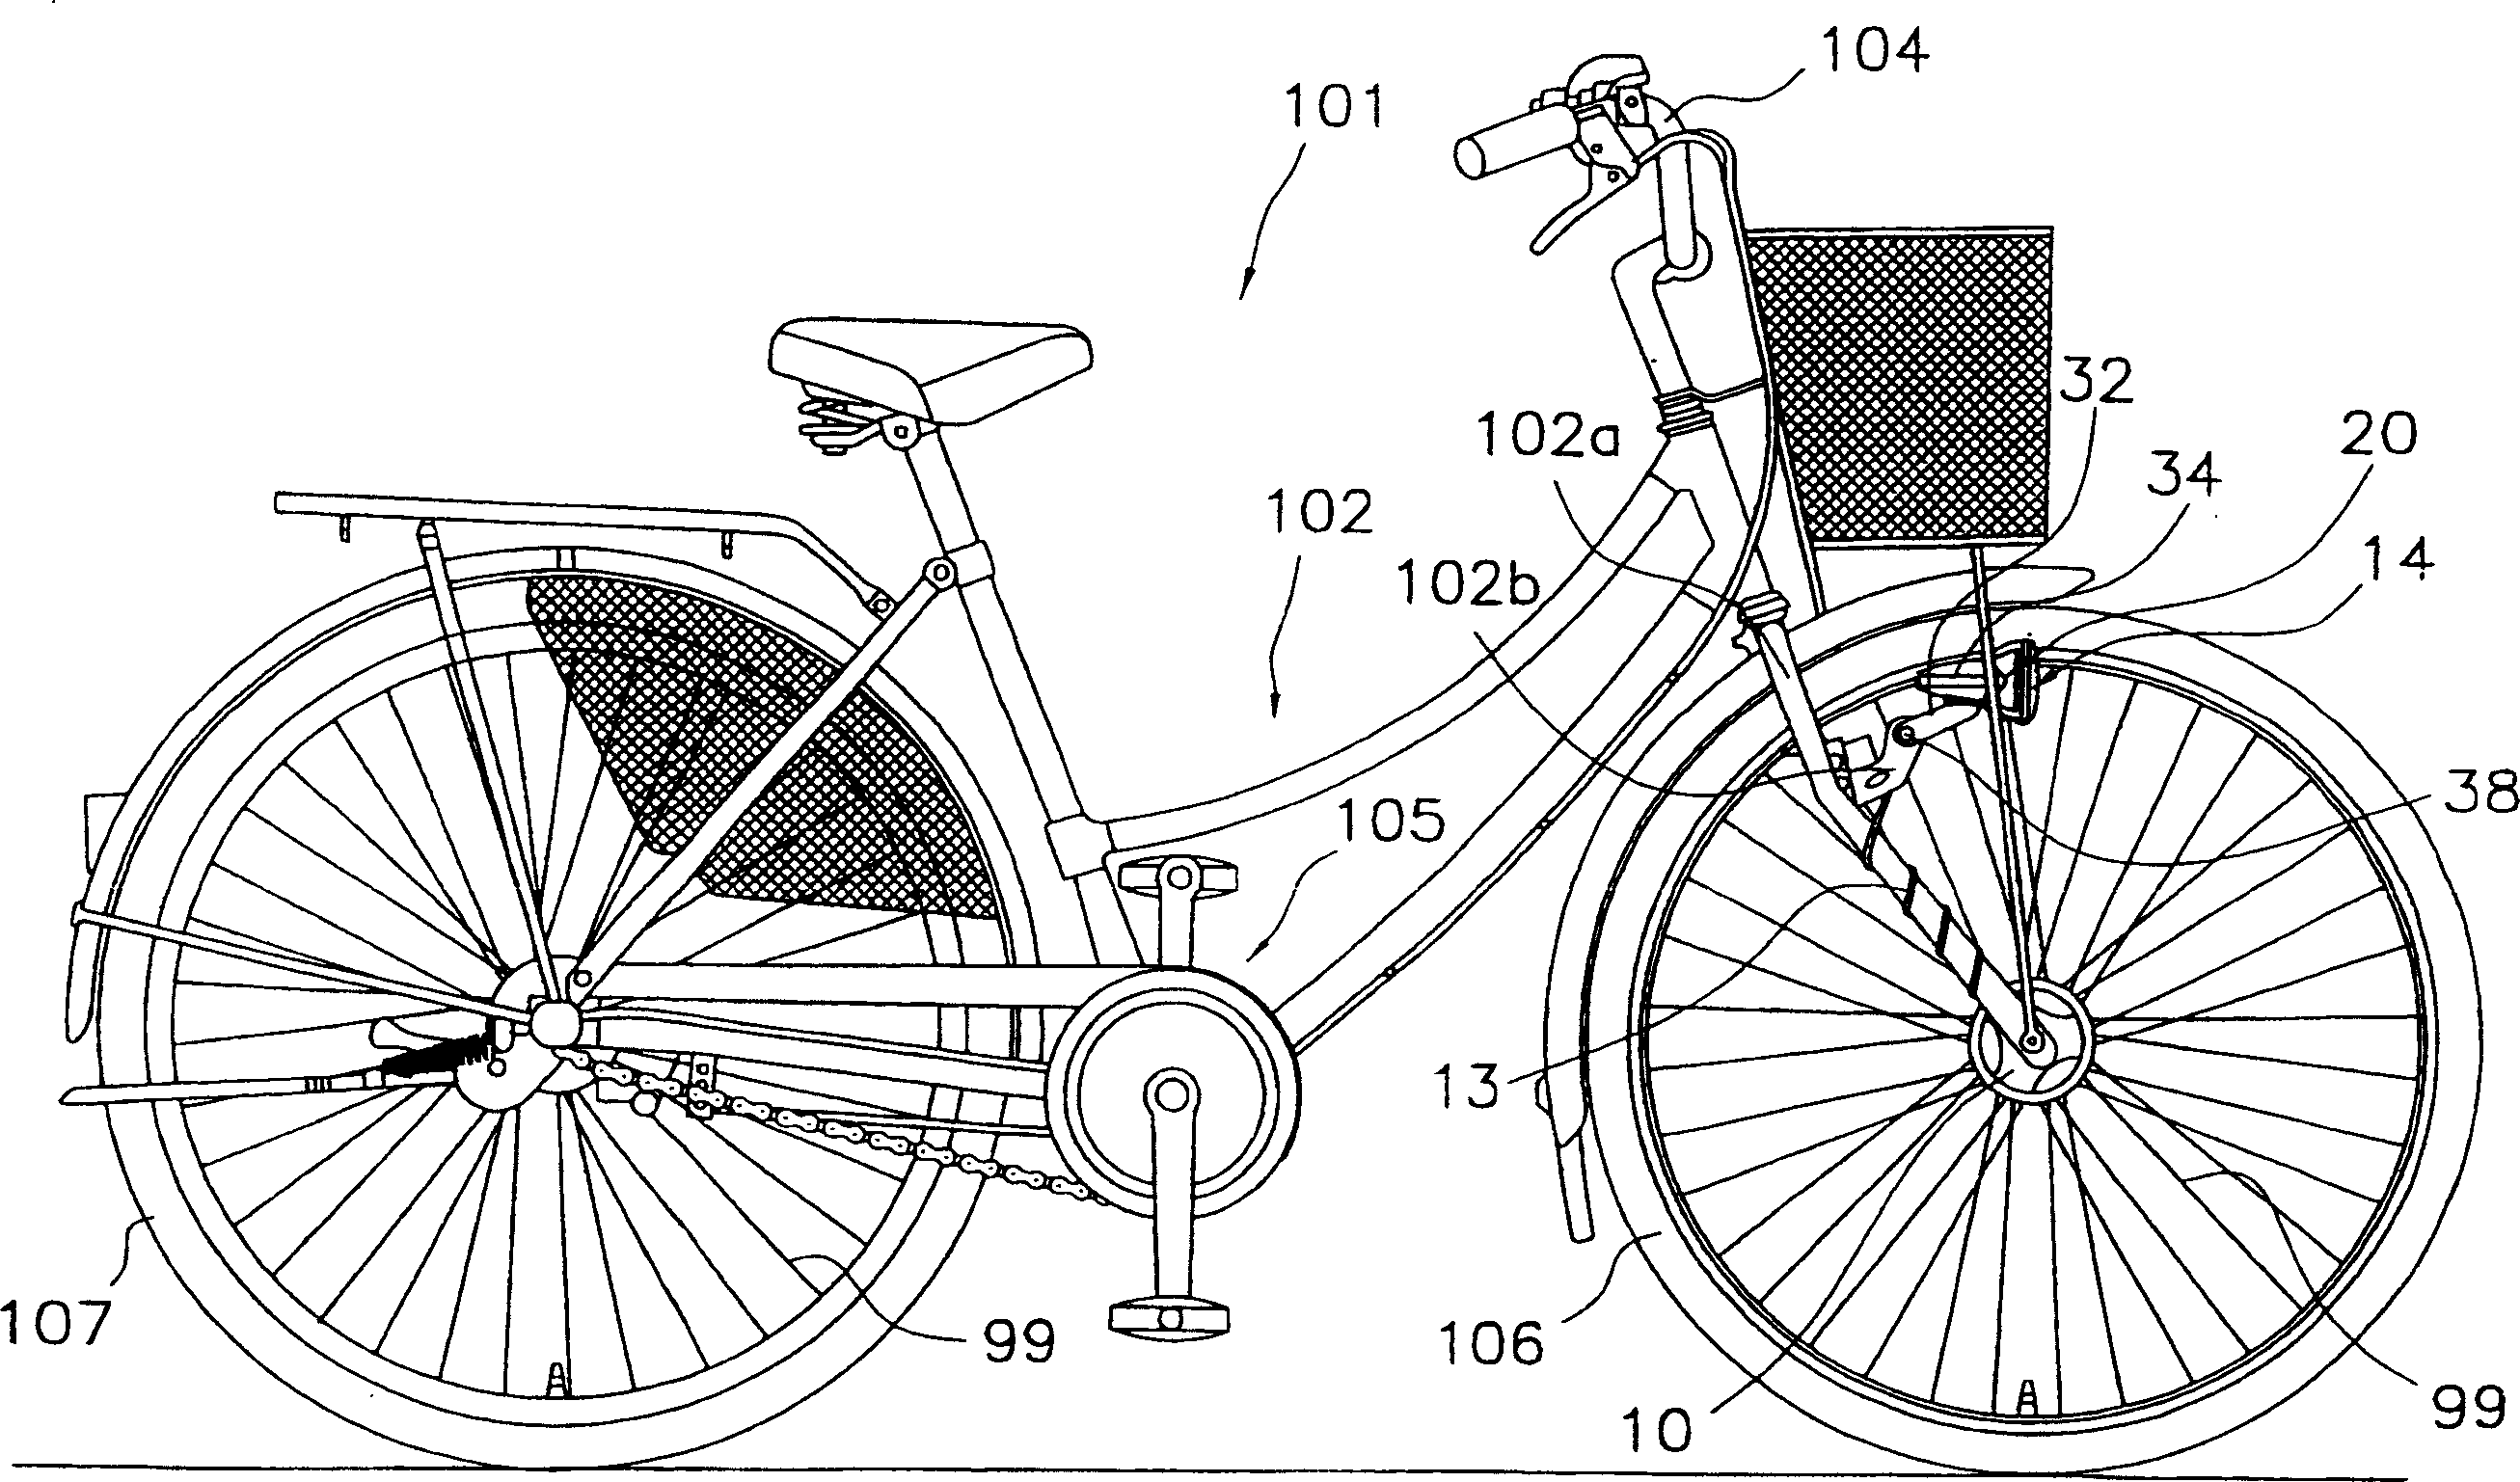 Bicycle lighting device